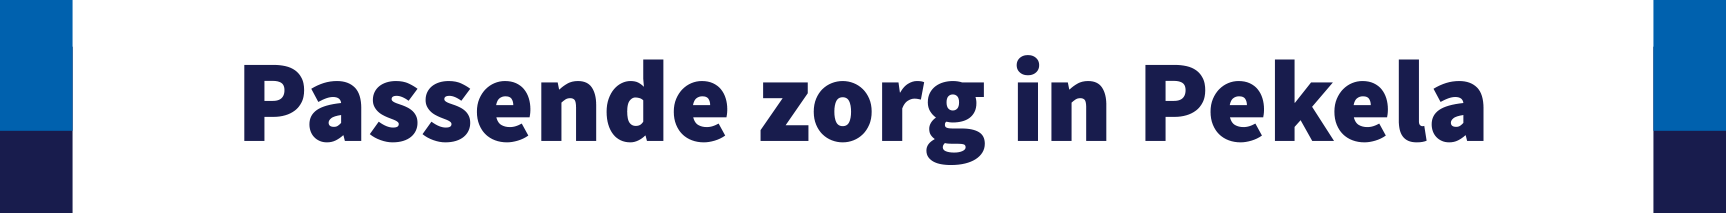 Logo Passende Zorg Pekela